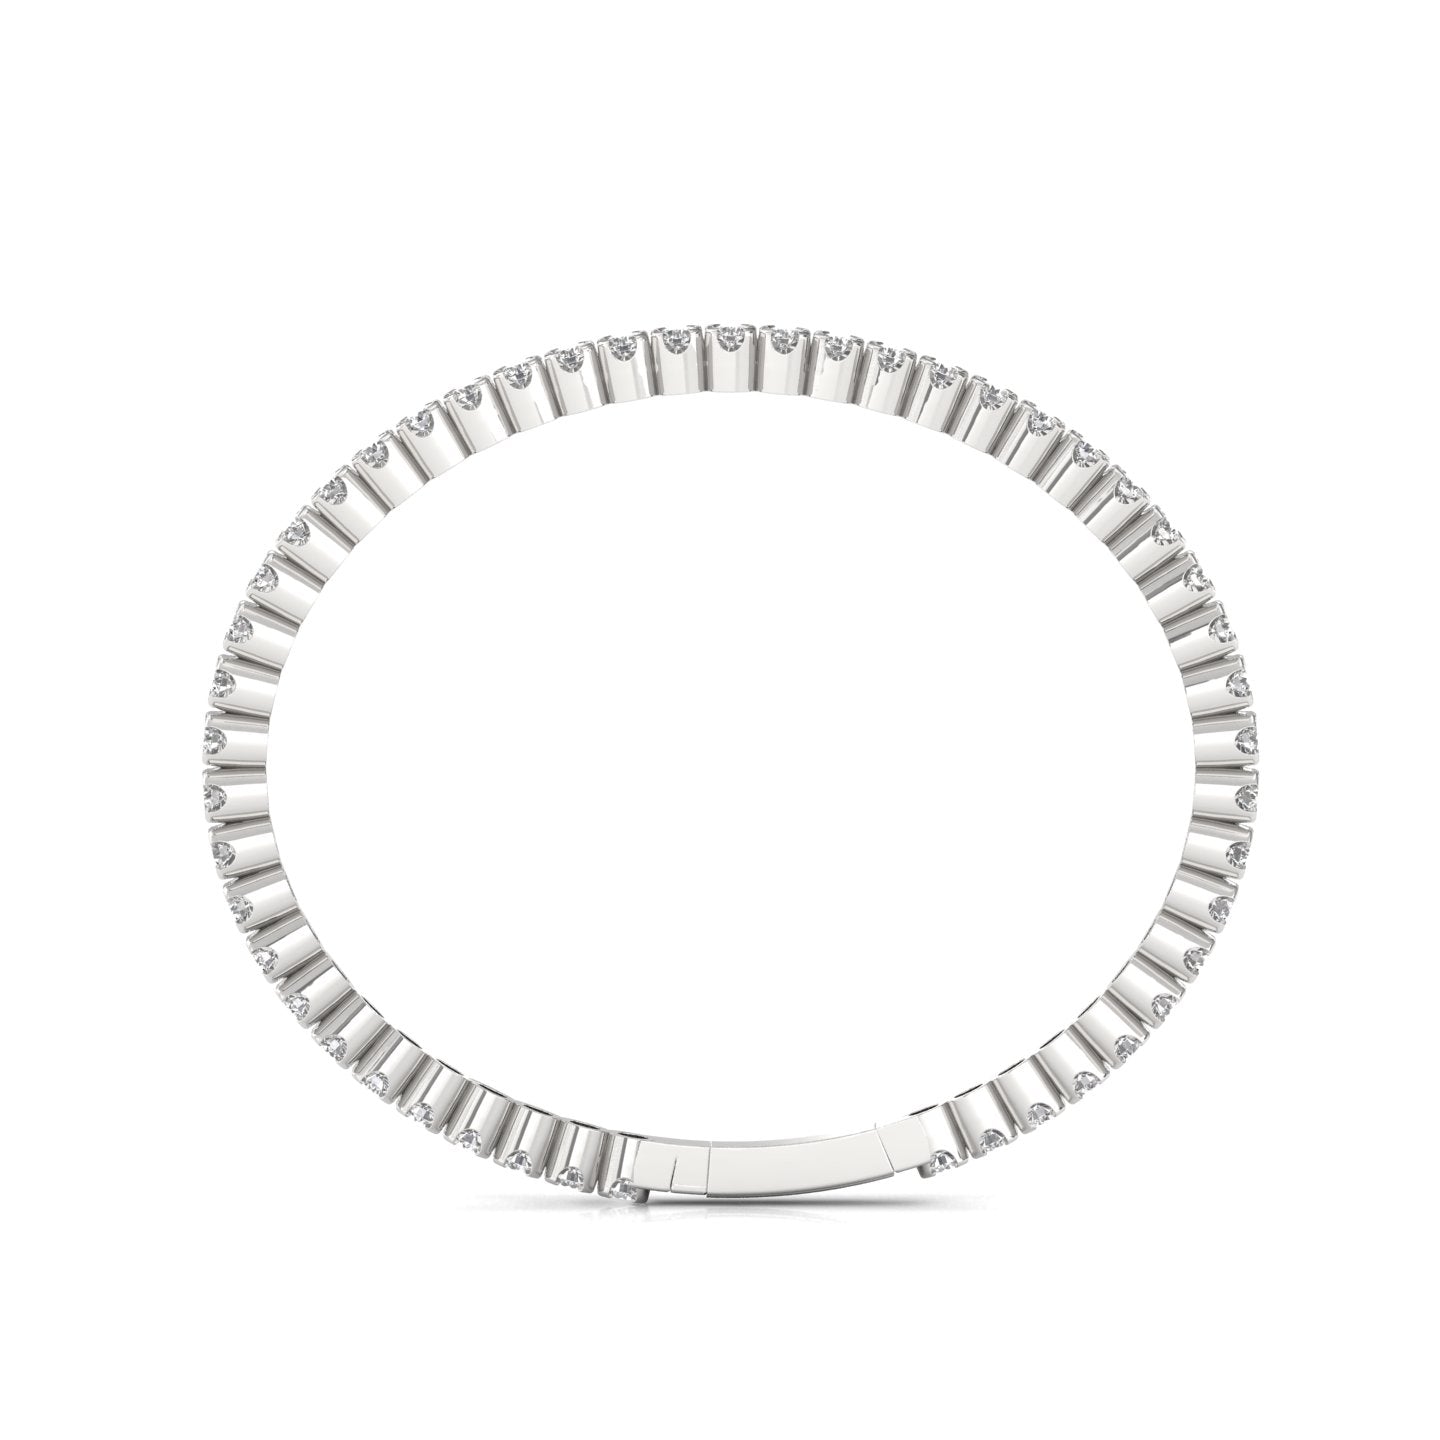 1.5 ct Diamond Flexible White Gold Tennis Bracelet